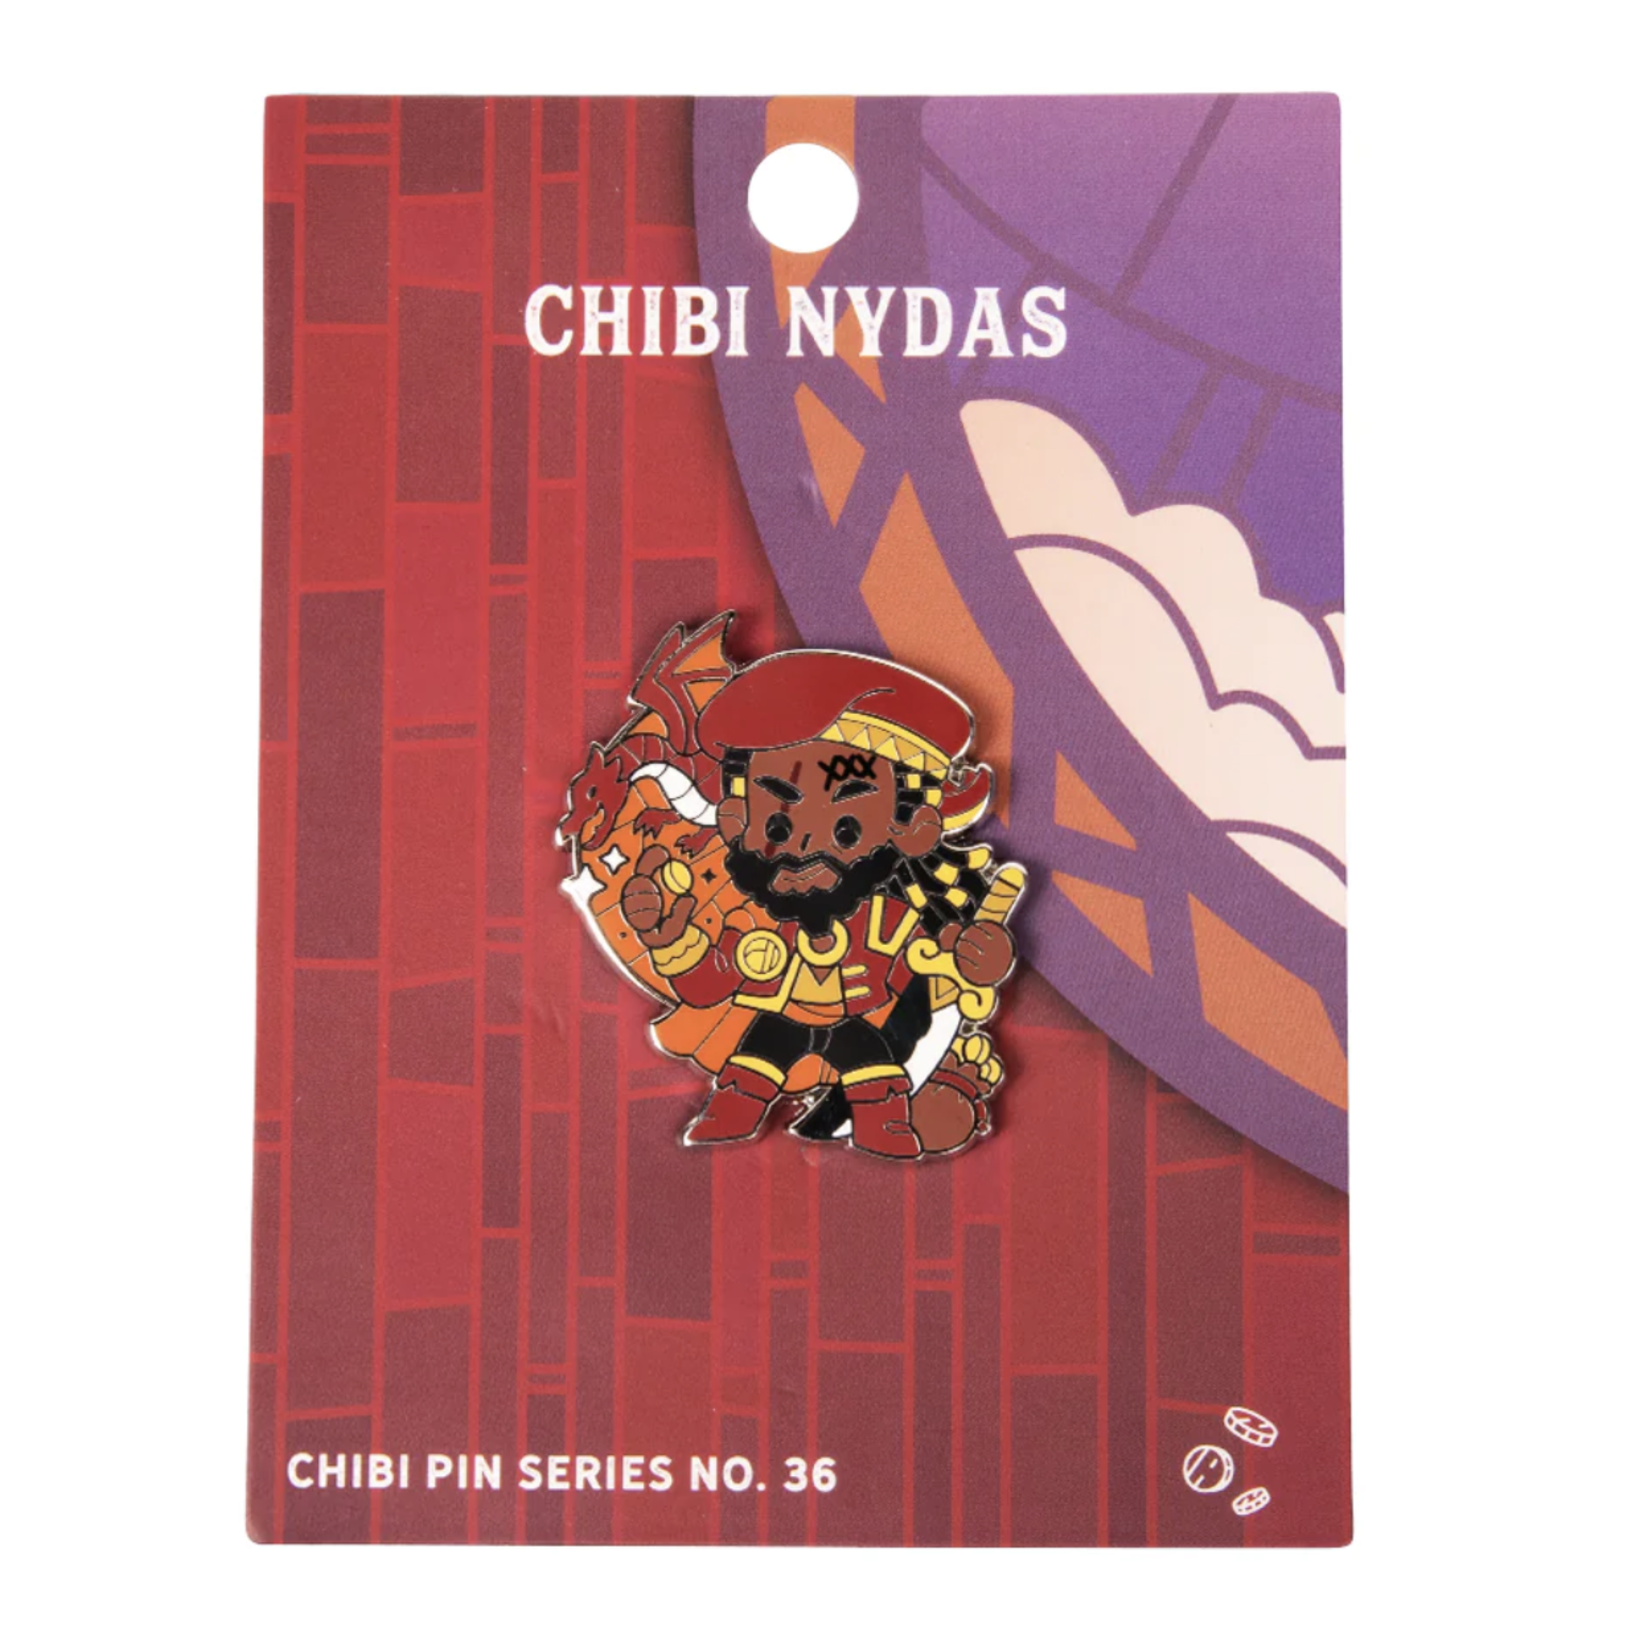 Critical Role Chibi Pin No. 36 - Nydas Okiro